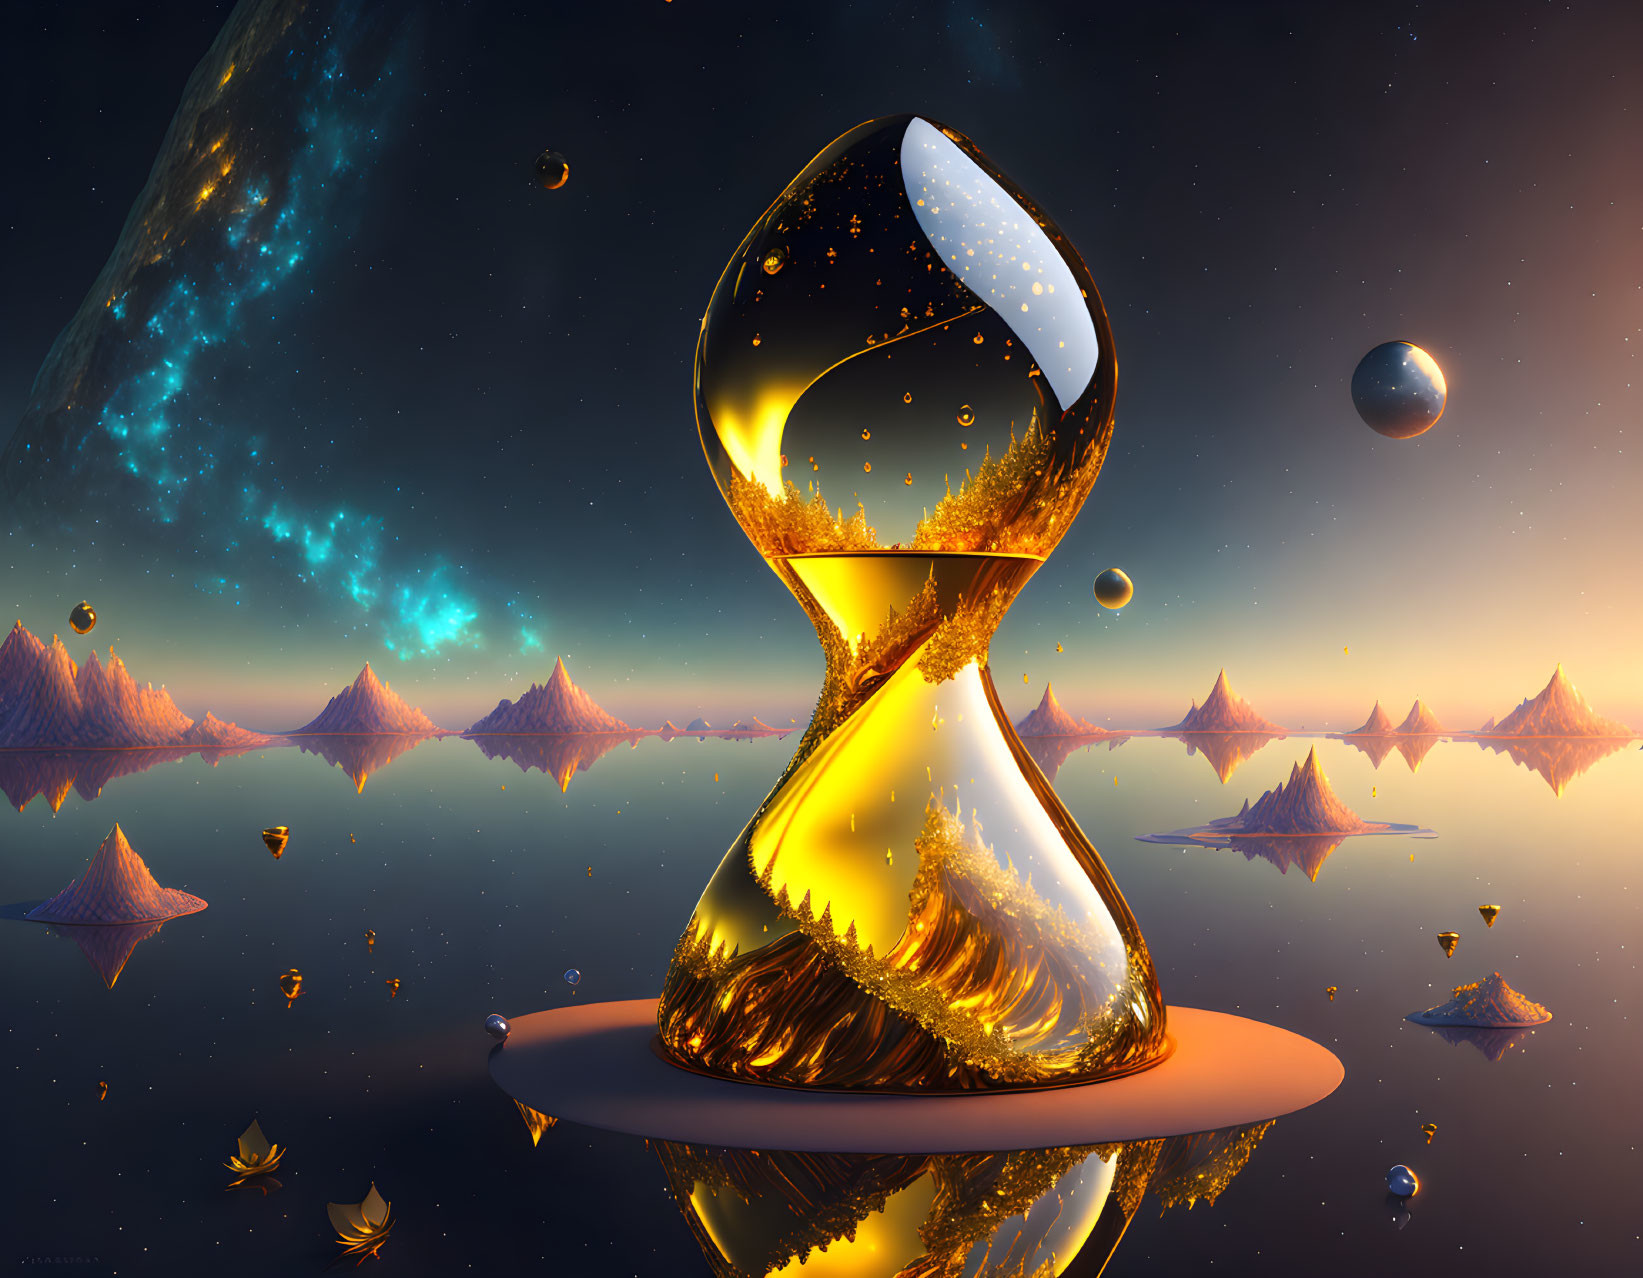 Surreal digital artwork: intricate hourglass among floating islands